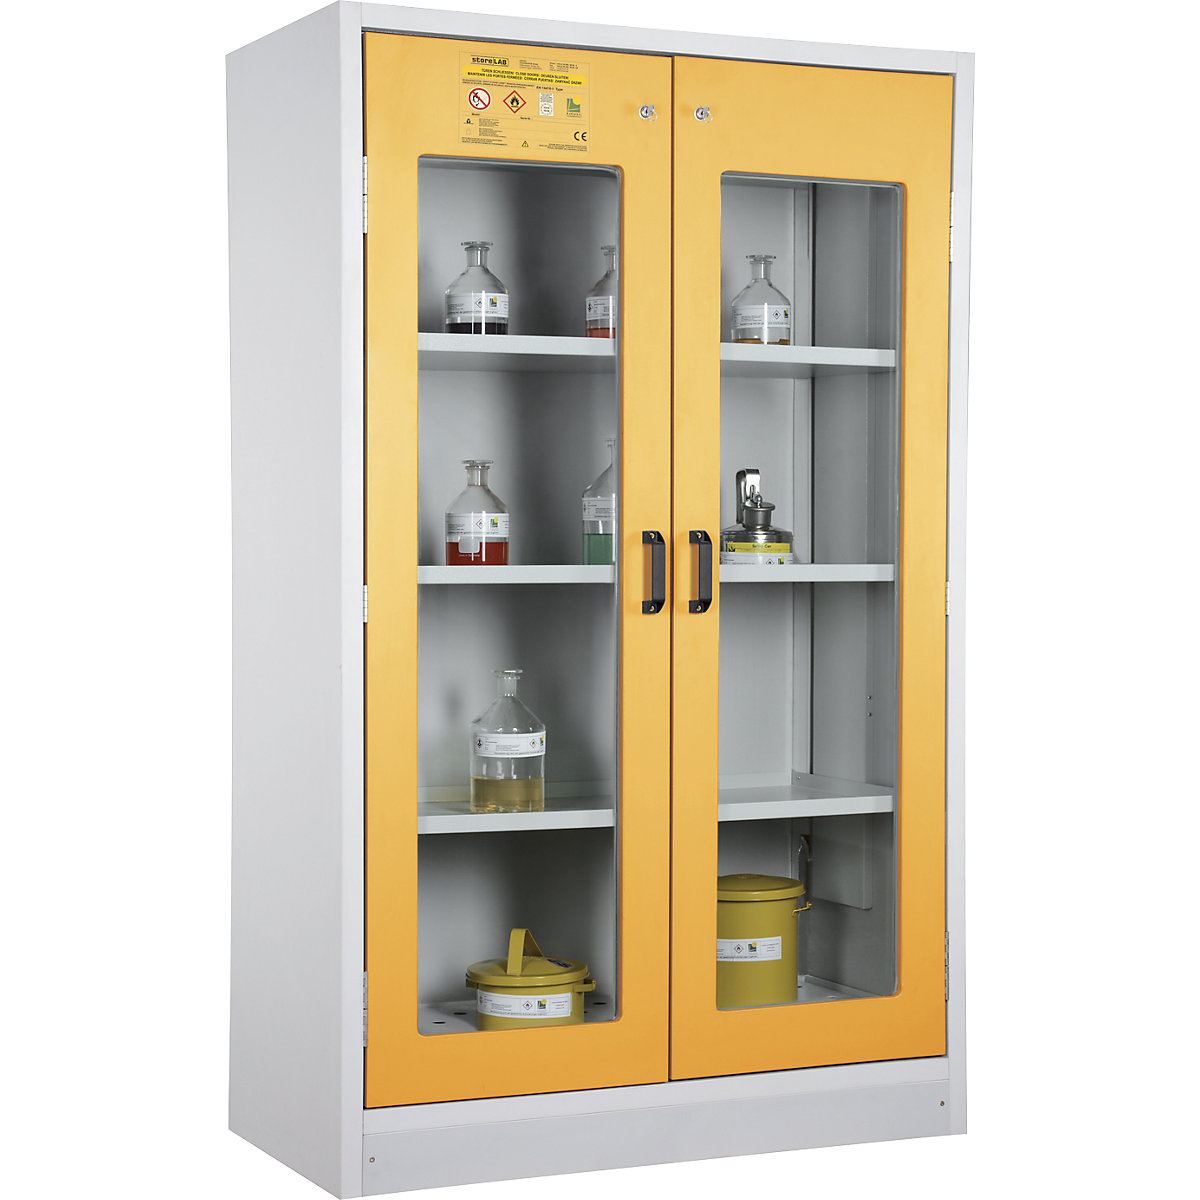 Fire resistant hazardous goods storage cupboard type 30 - LaCont